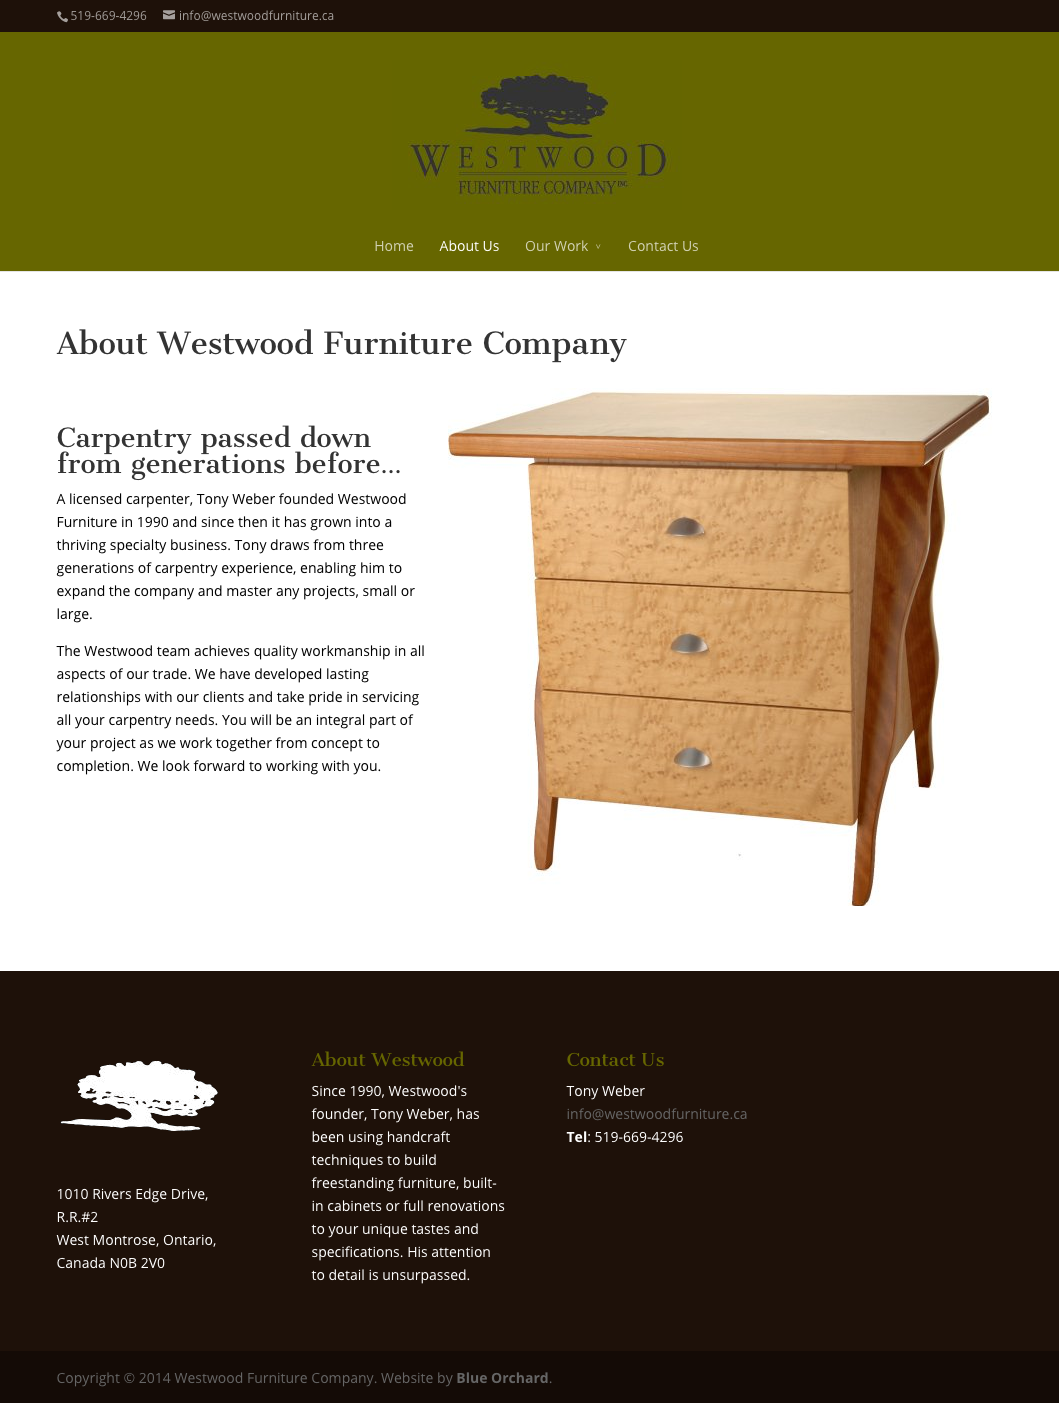 WestwoodFurniture.ca - Upgraded Website - 2014